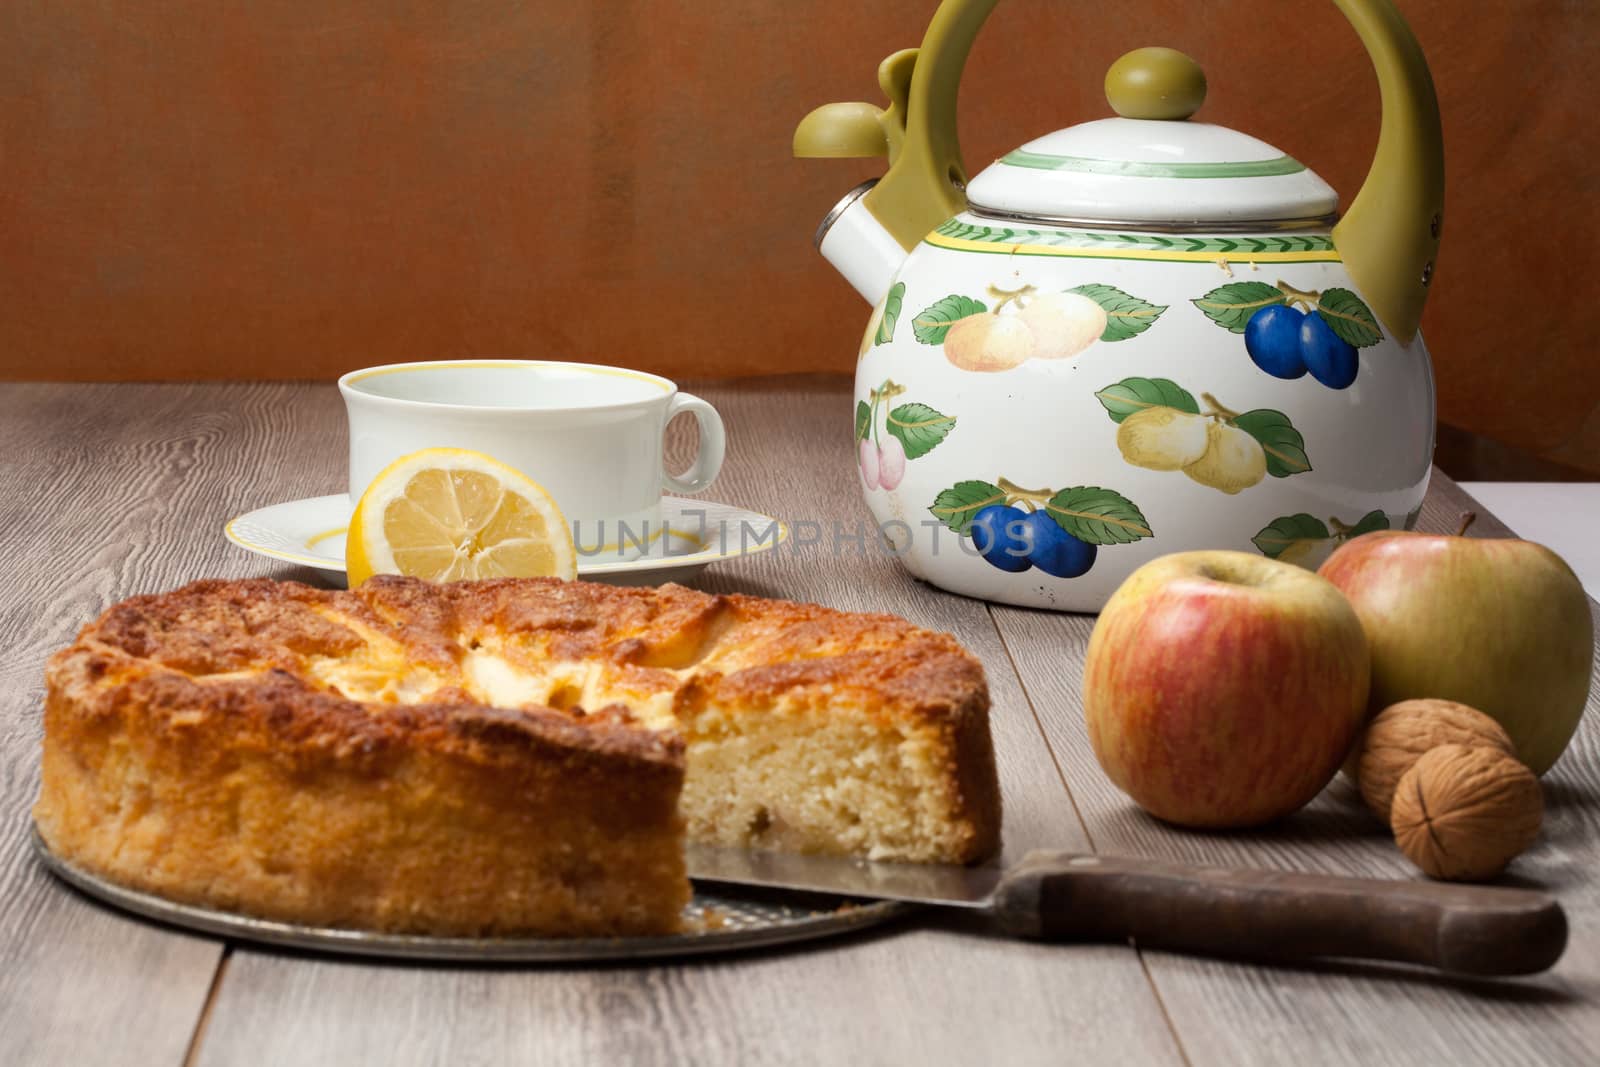 Apple cake and apple fruit